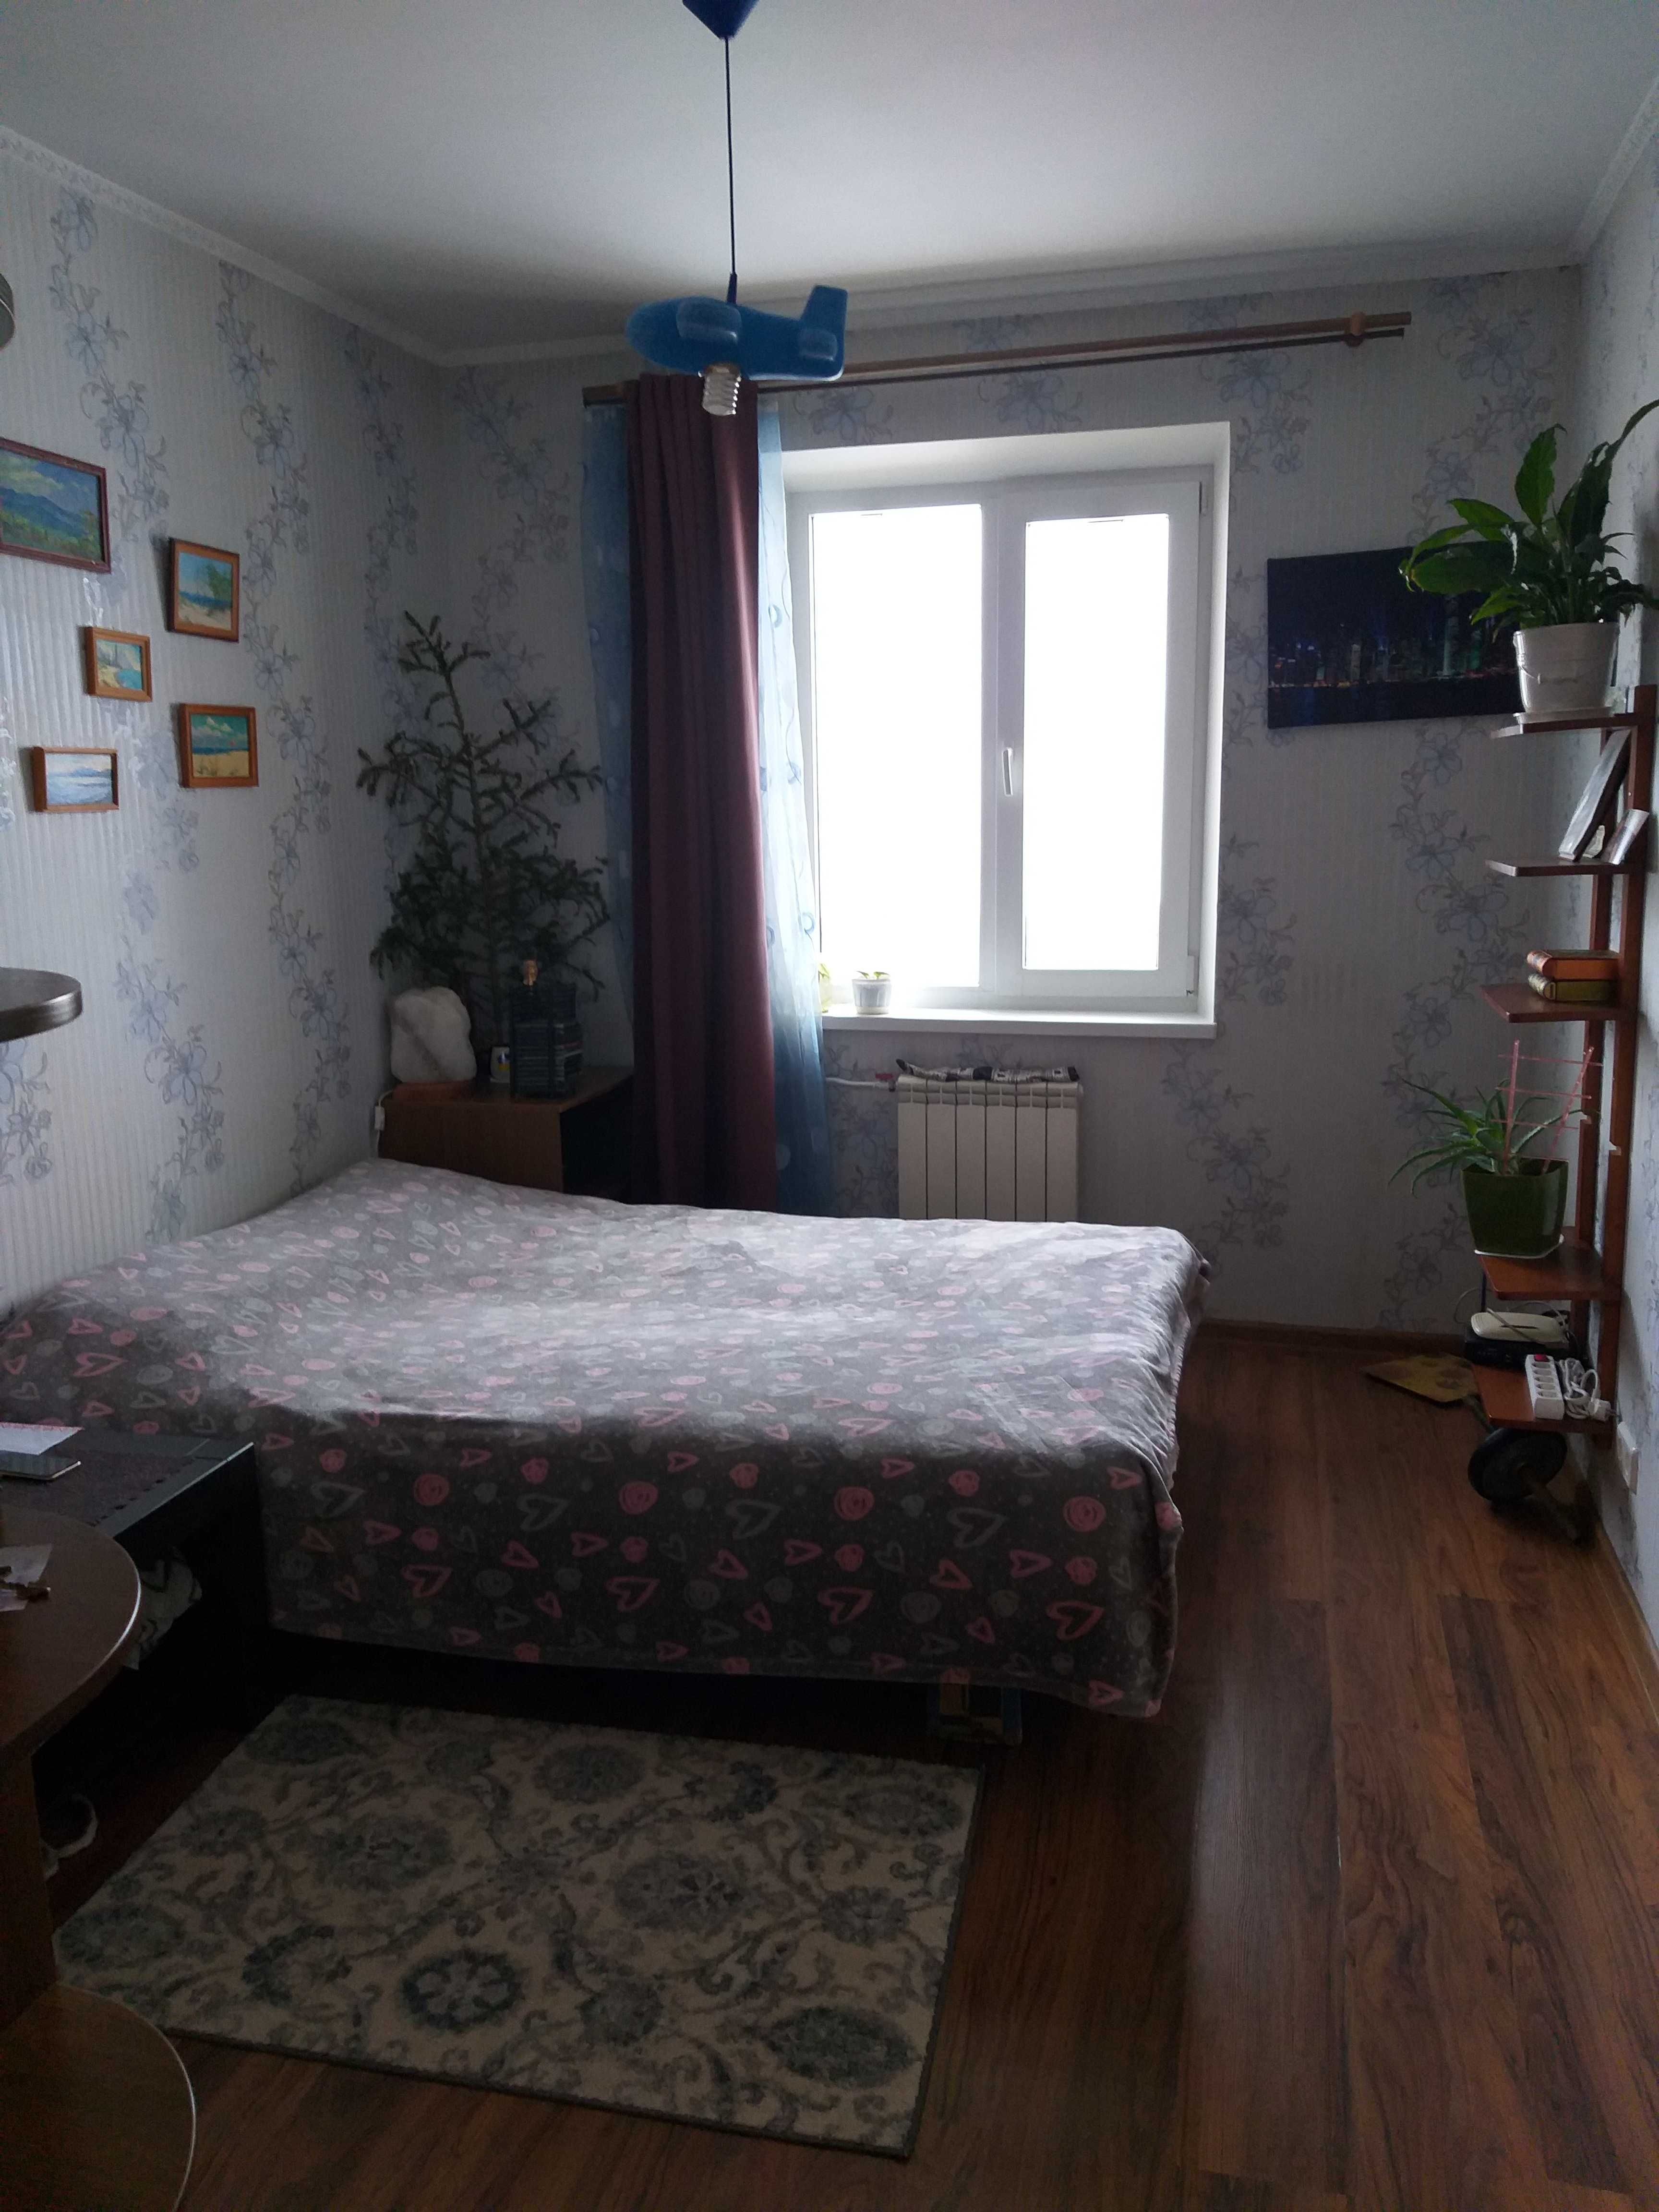 Квартира в Києві двокімнатна, 52 кв.м, Позняки, вул. Драгоманова